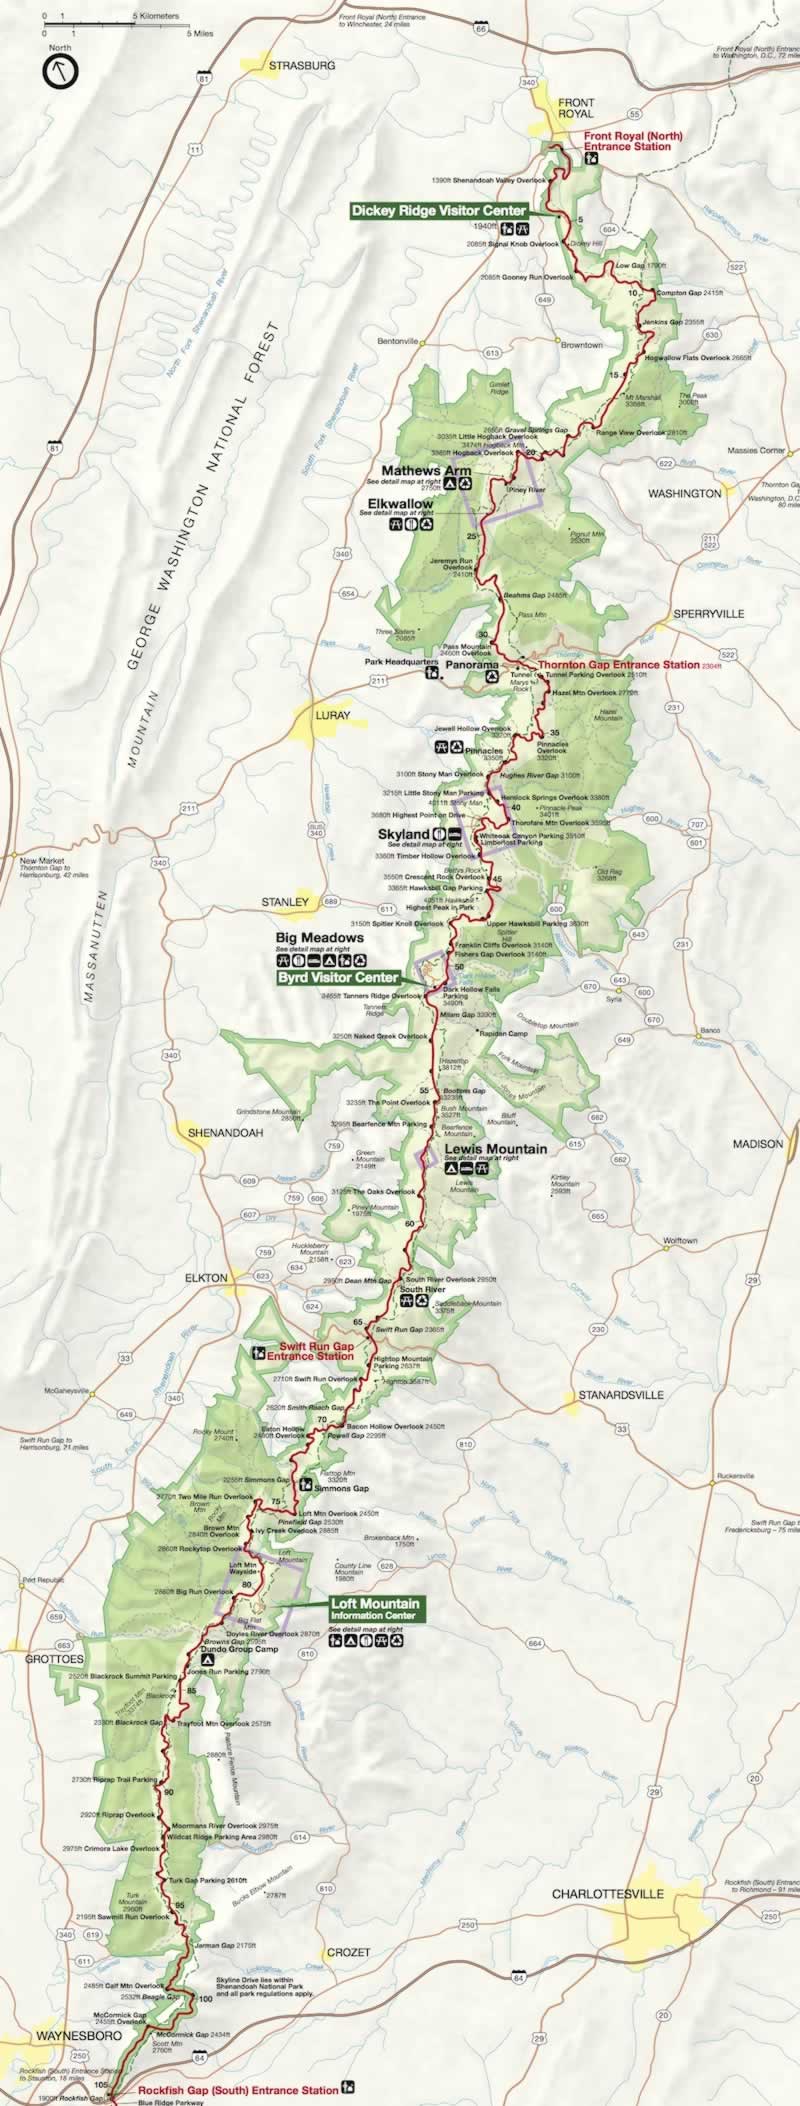 Map of Shenandoah National Park in Virginia